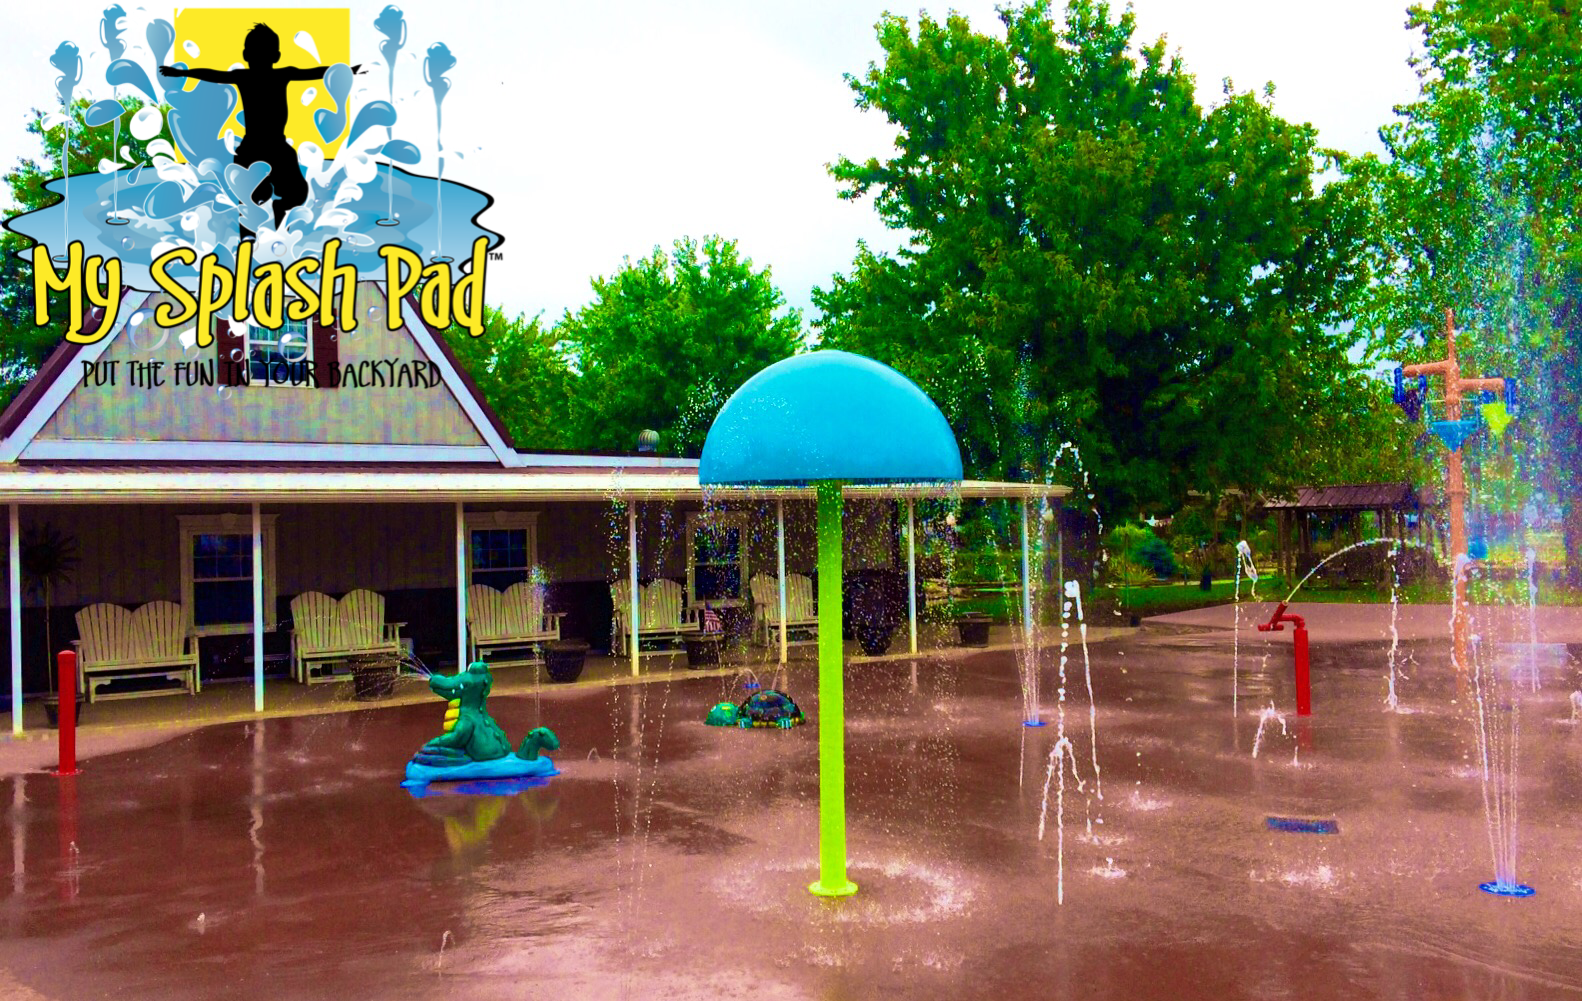 My Splash Pad Huggy Bear campground water park splashpad spray playground aquatic play area installer